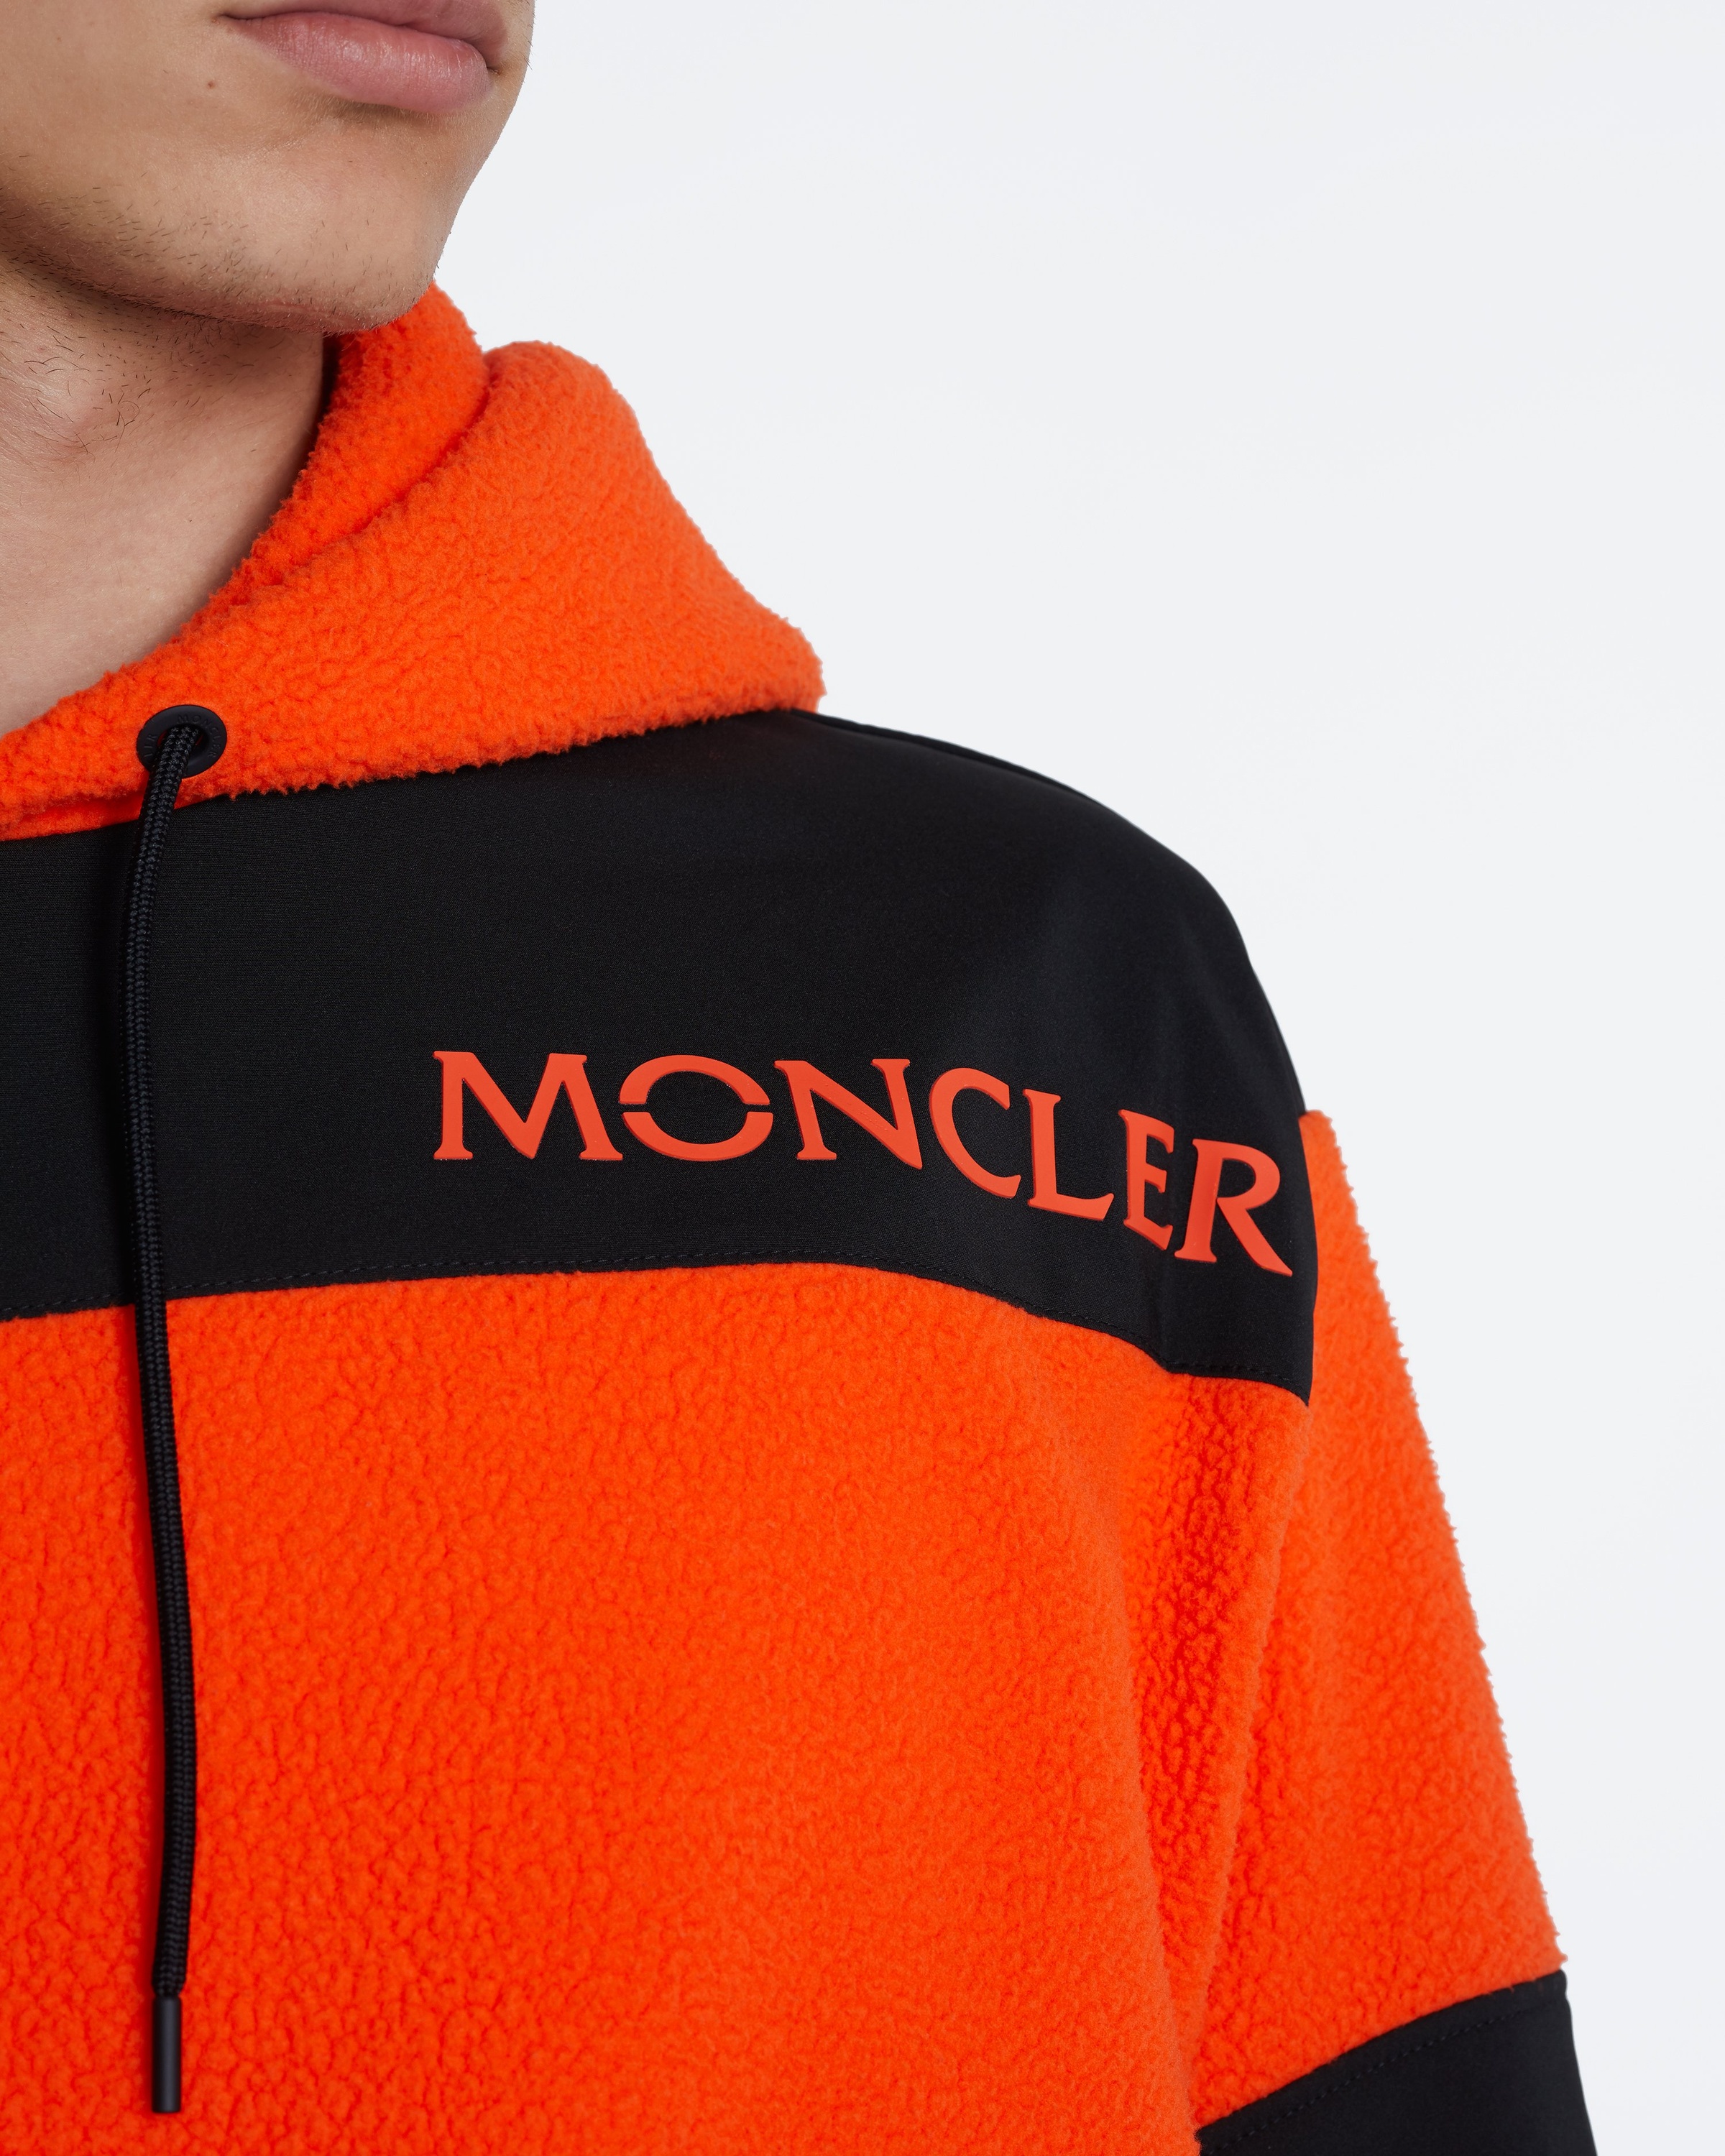 Moncler Genius – Recycled Jumper - Sweats - Orange - Image 5